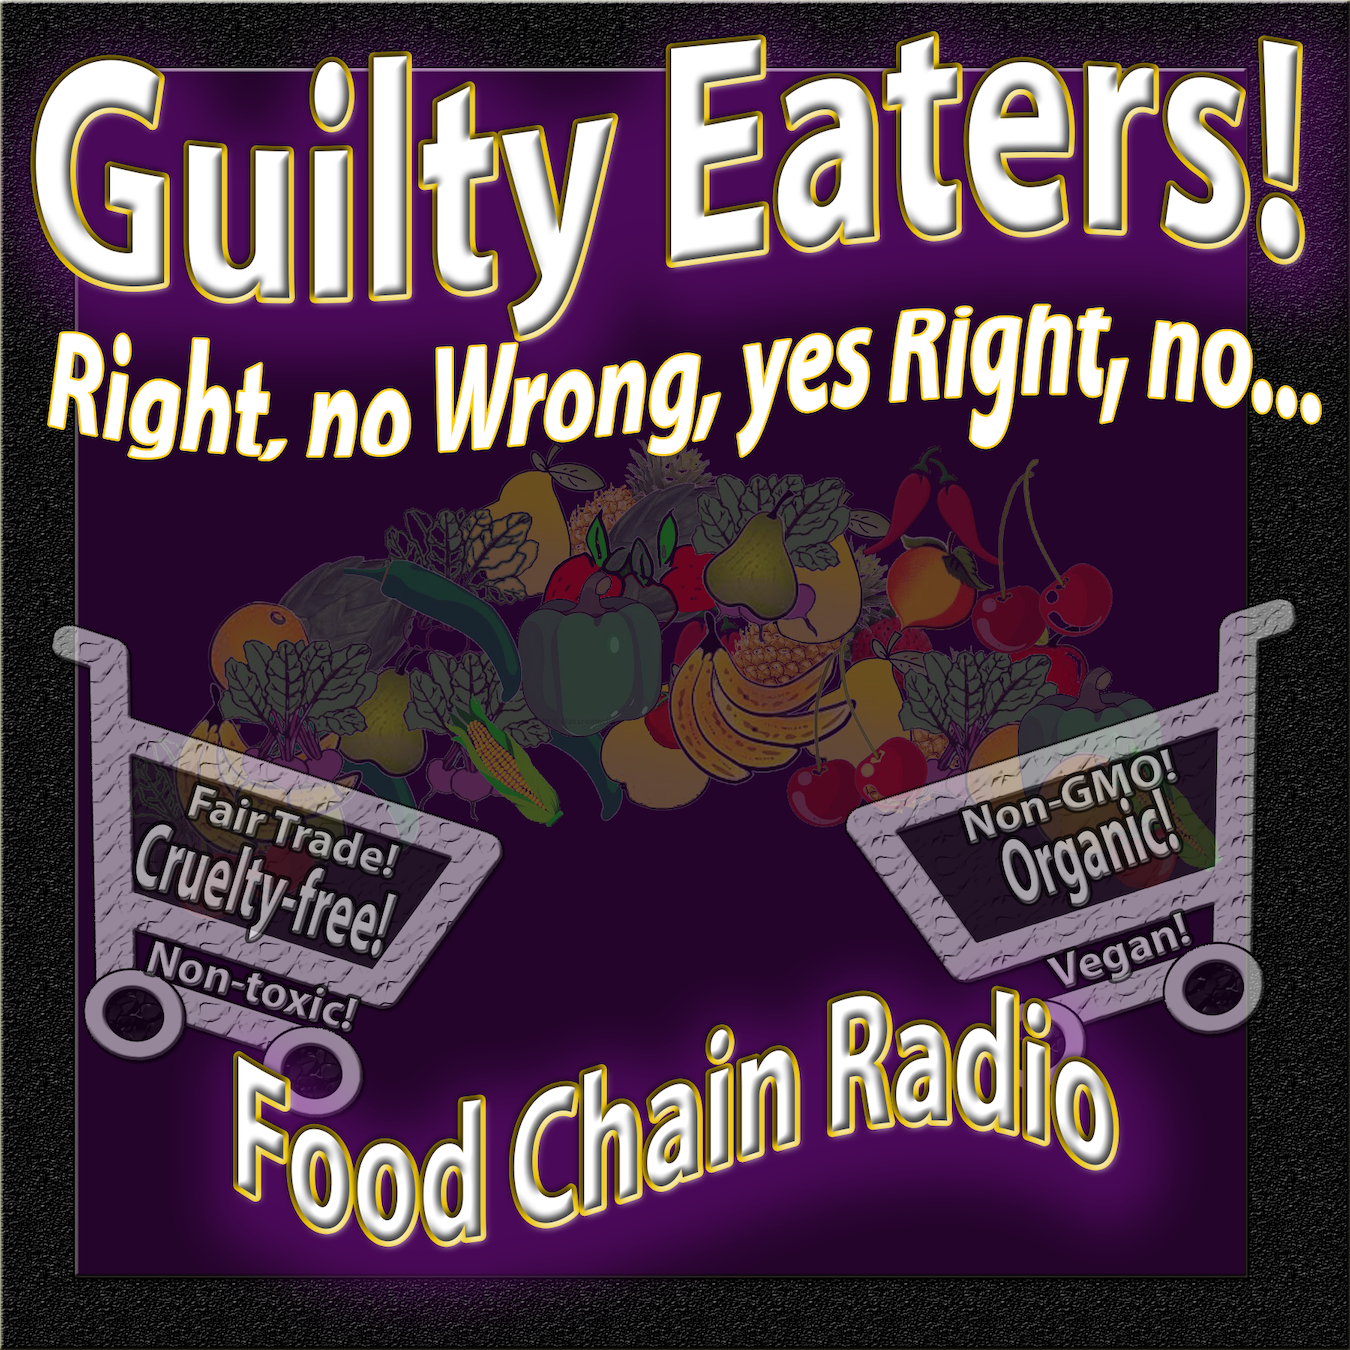 Michael Olson Food Chain Radio – Guilty Eaters! Organic, non-GMO, Vegan, Cruelty-free, Fair Trade, Non-toxic,...